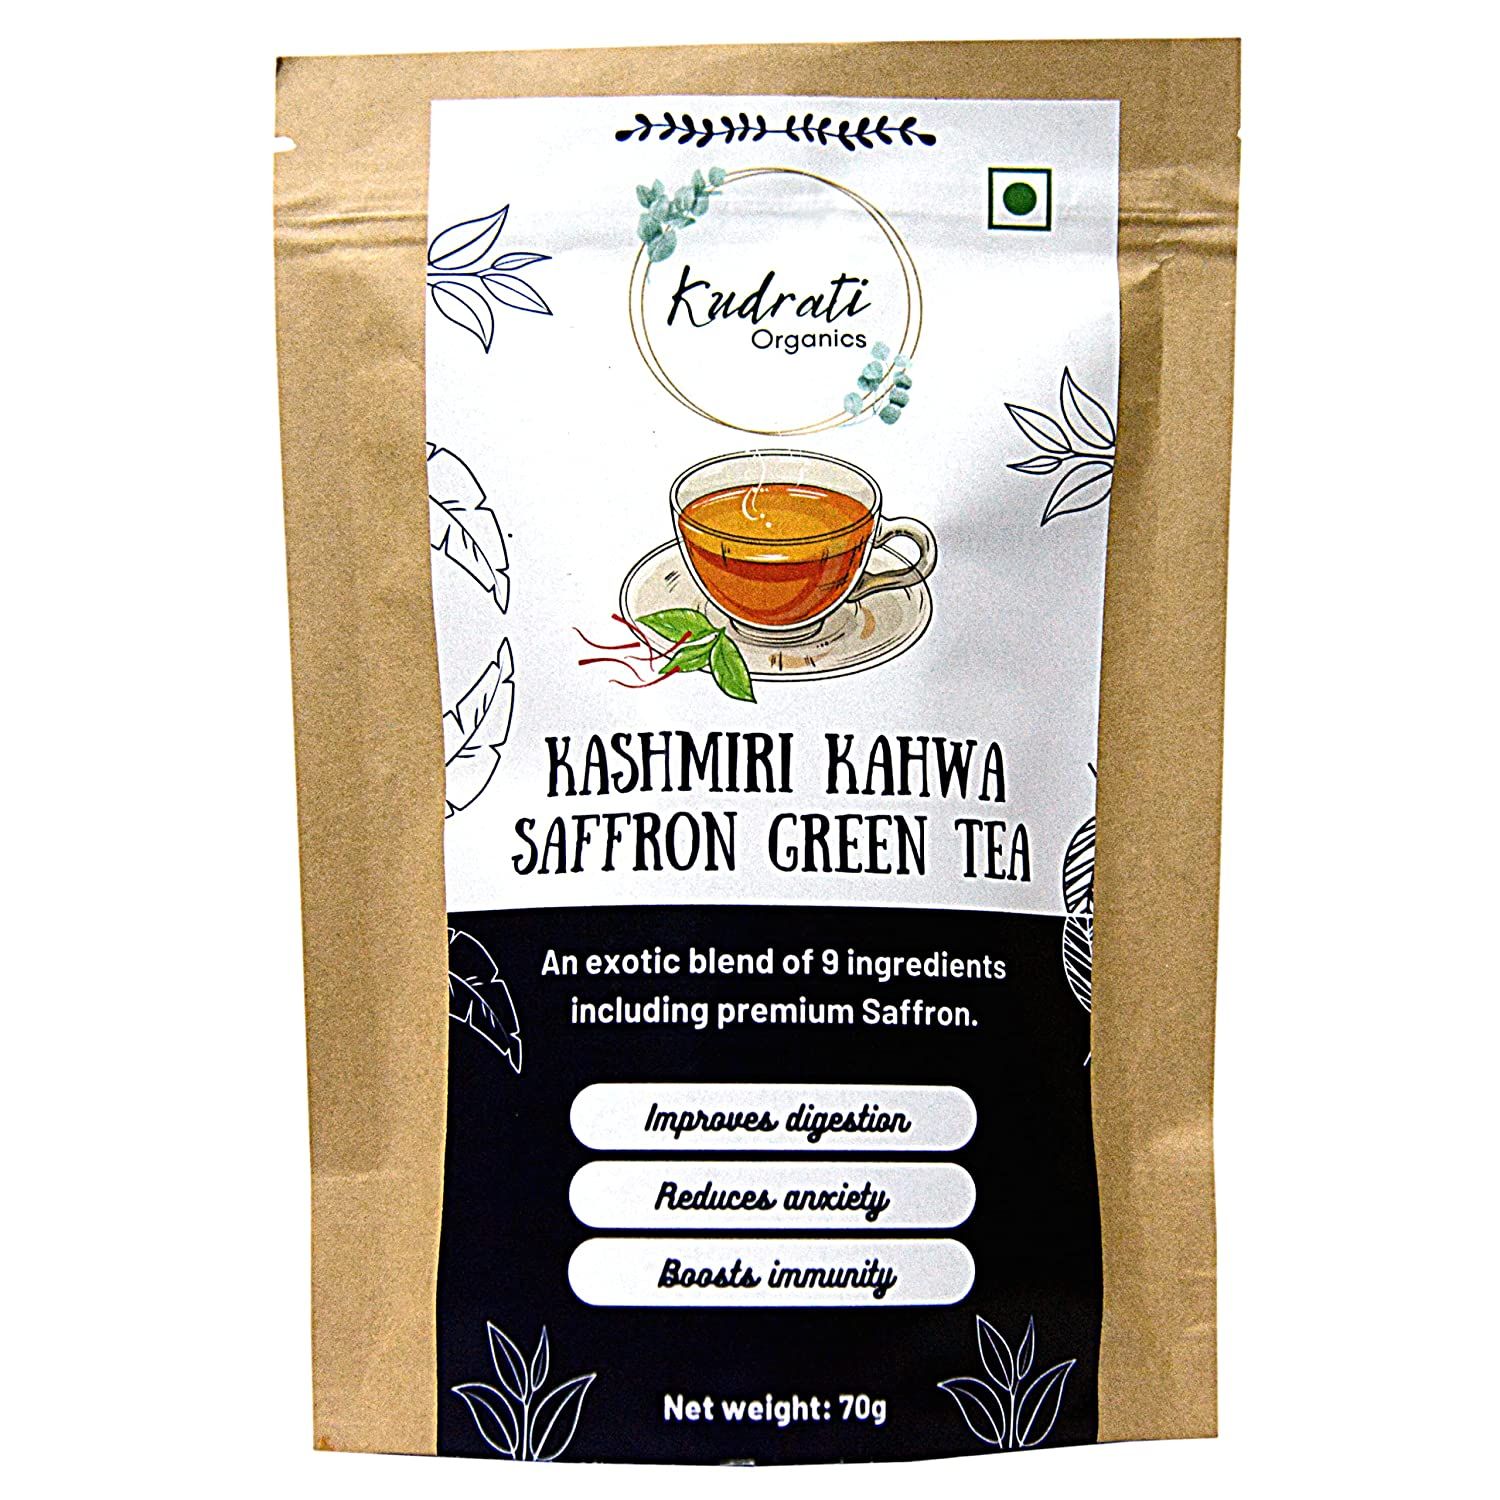 Kudrati Organics Saffron Green Tea Image